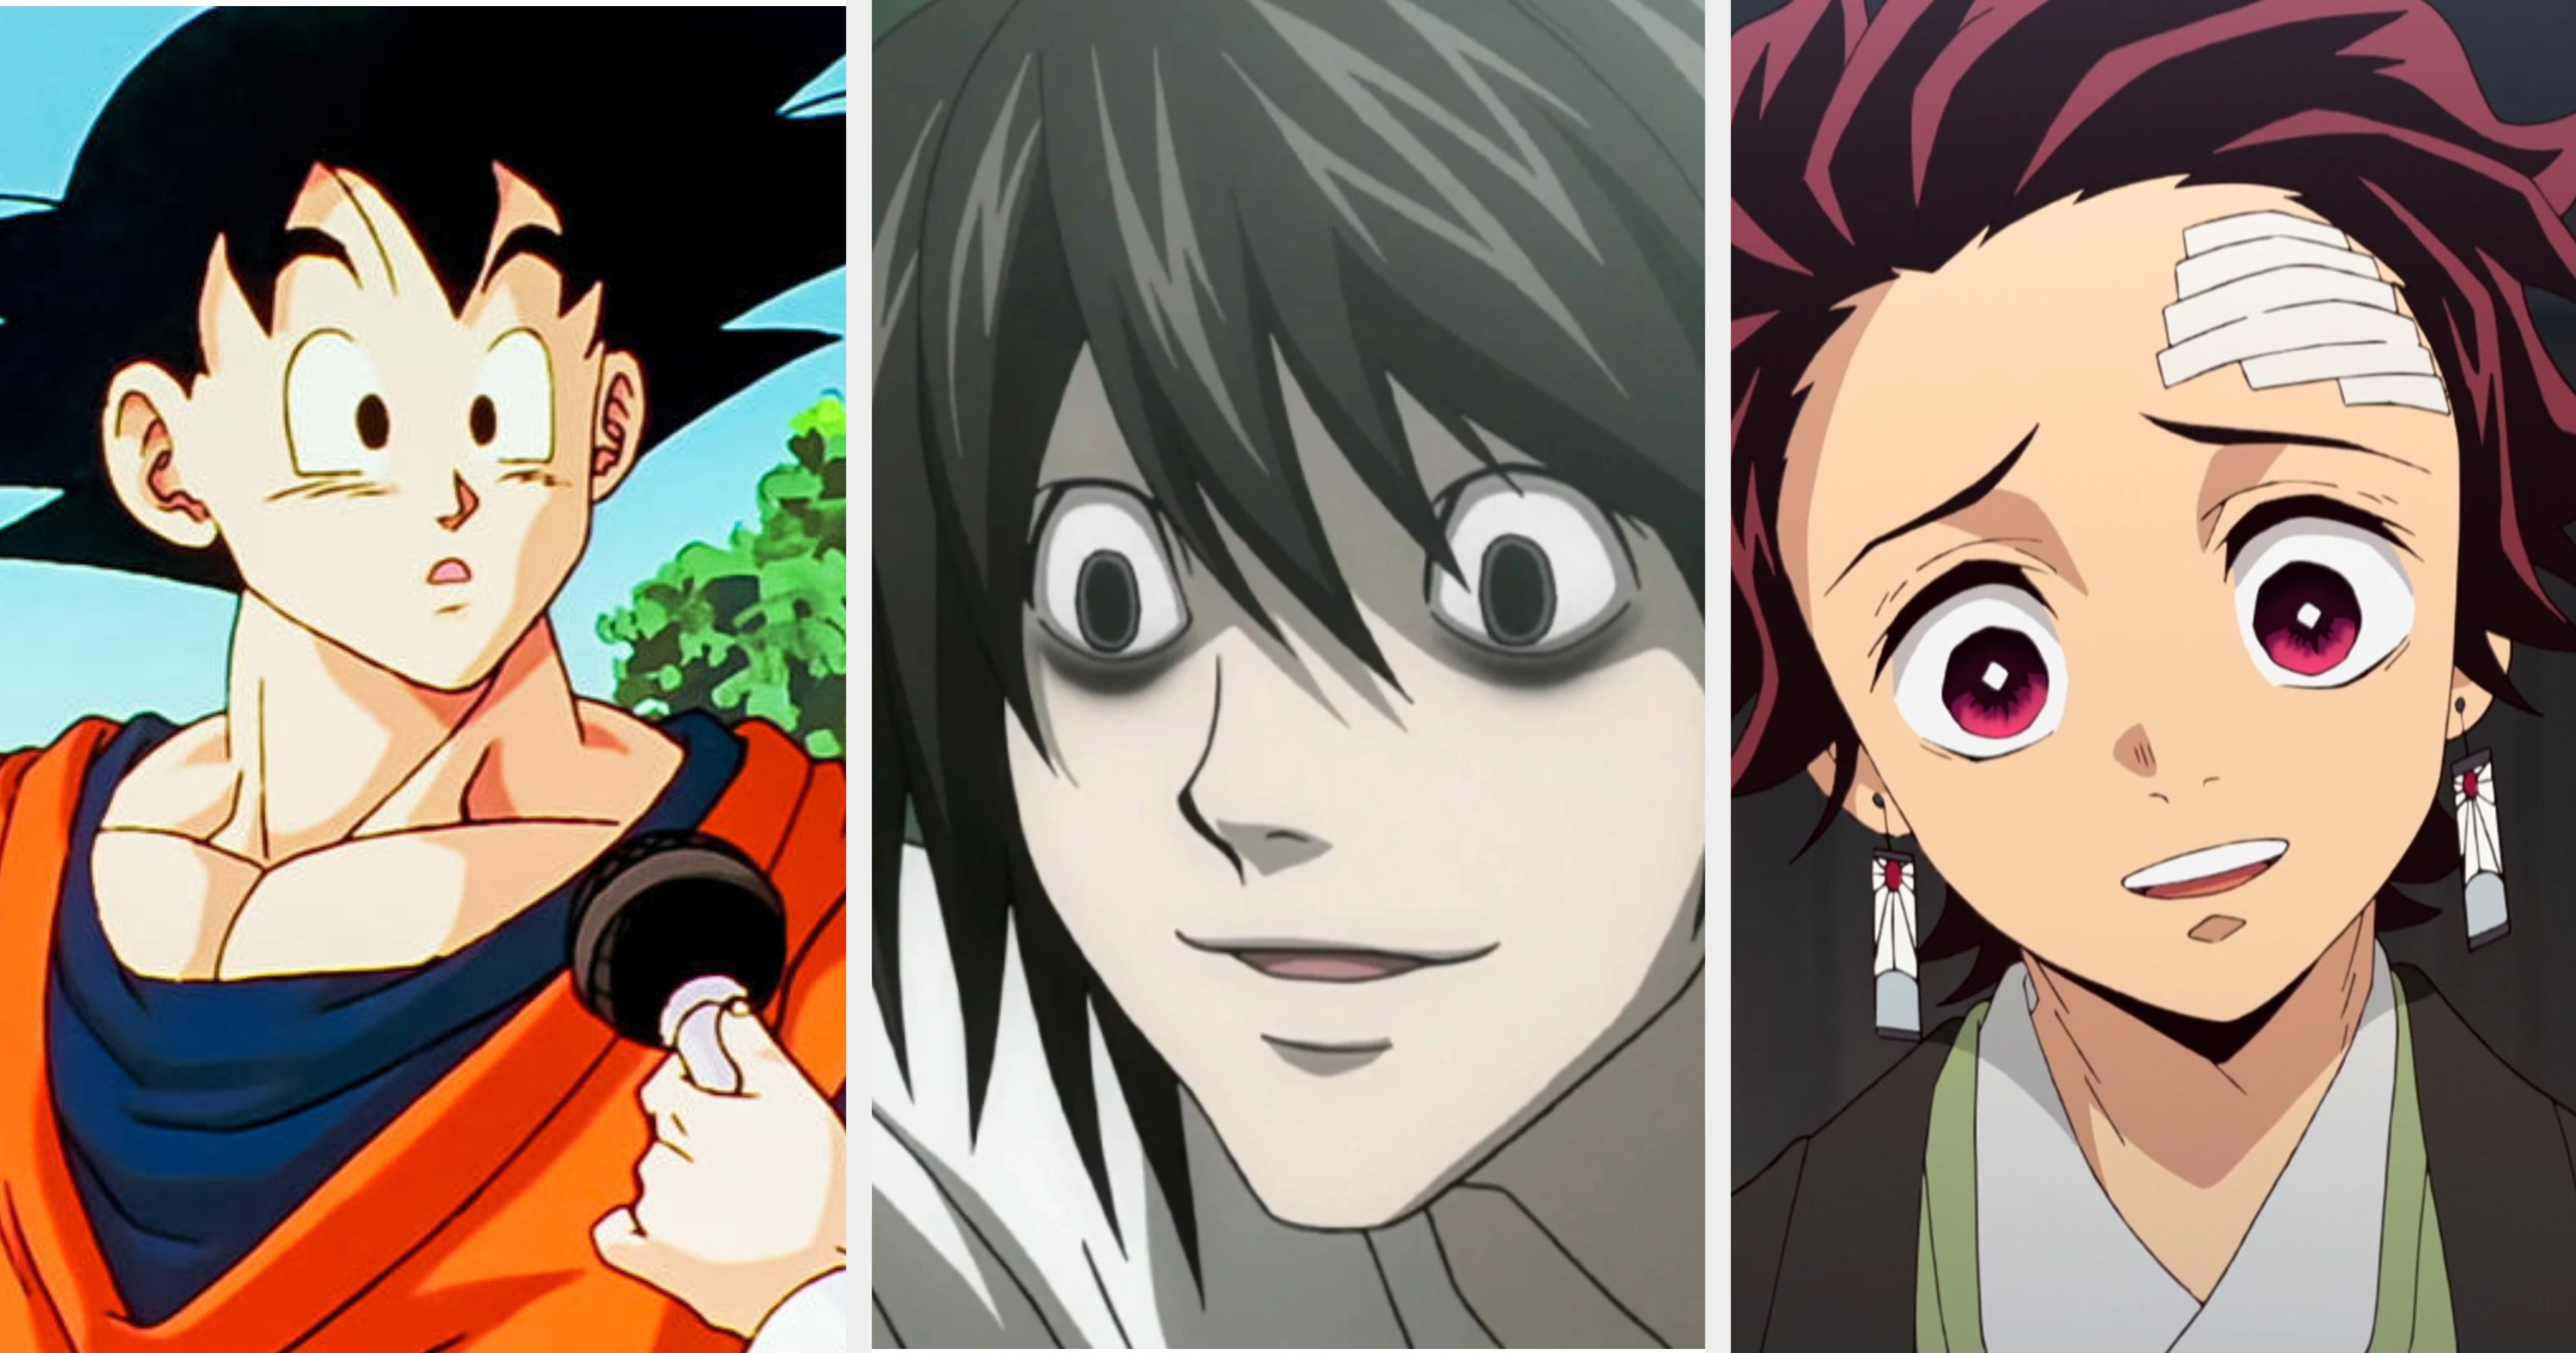 Anime Quiz: Guess the Anime Genre - TriviaCreator